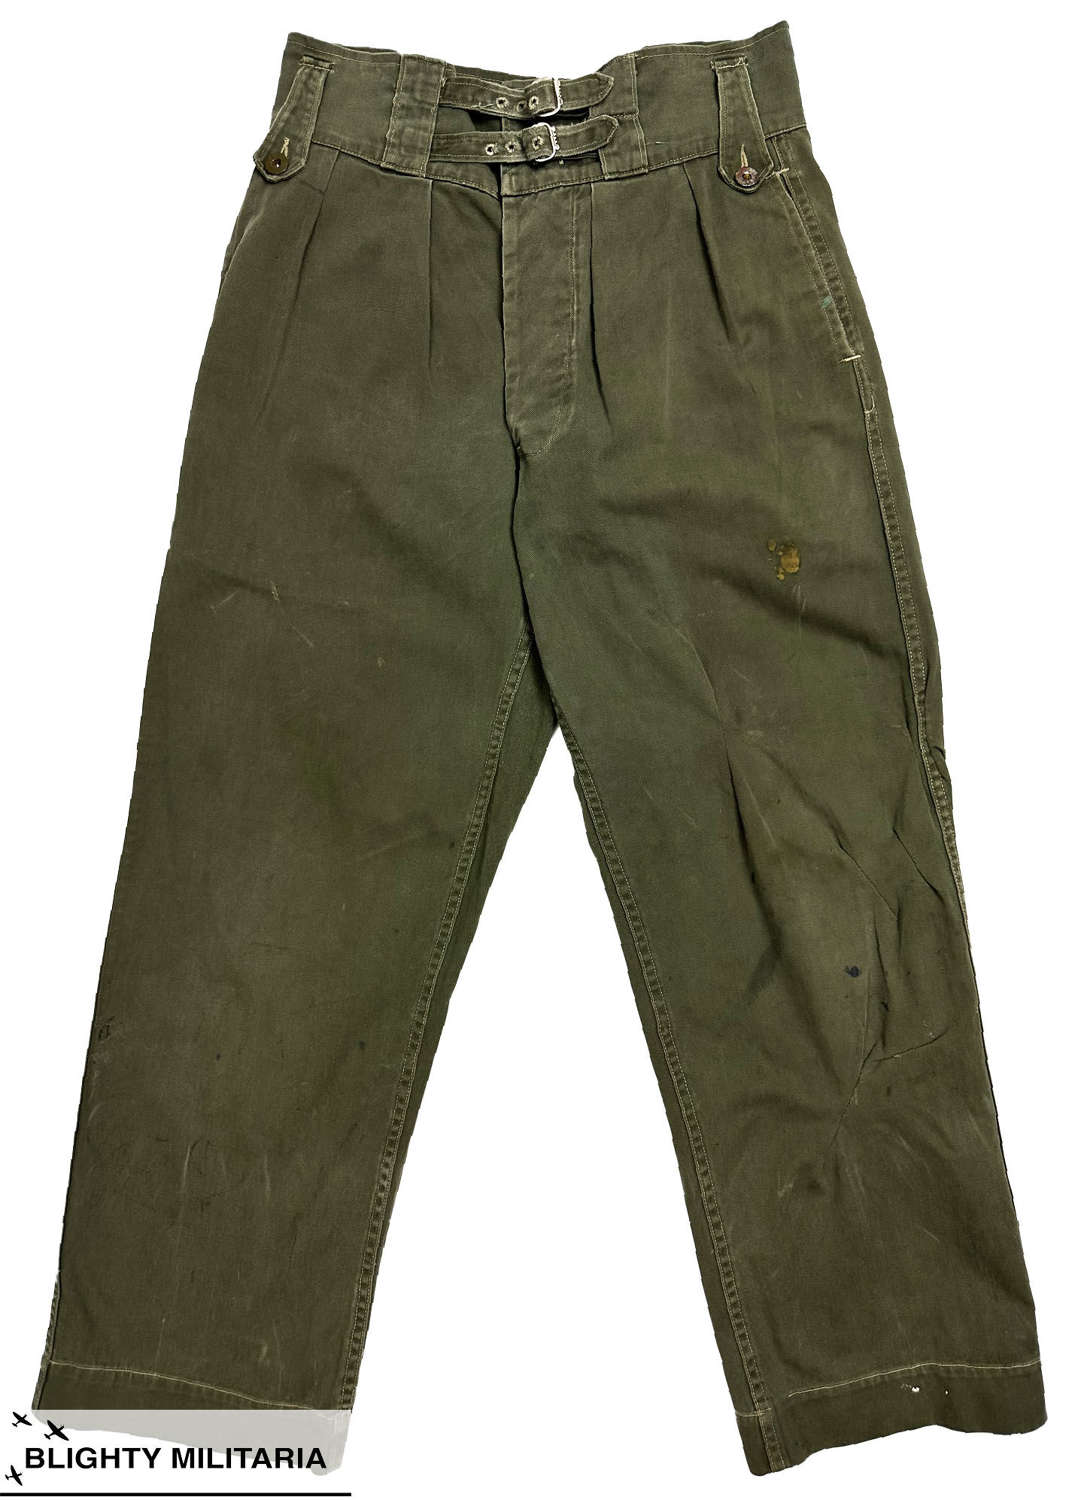 Original 1940s Canadian Jungle Green Trousers - Size 29x28